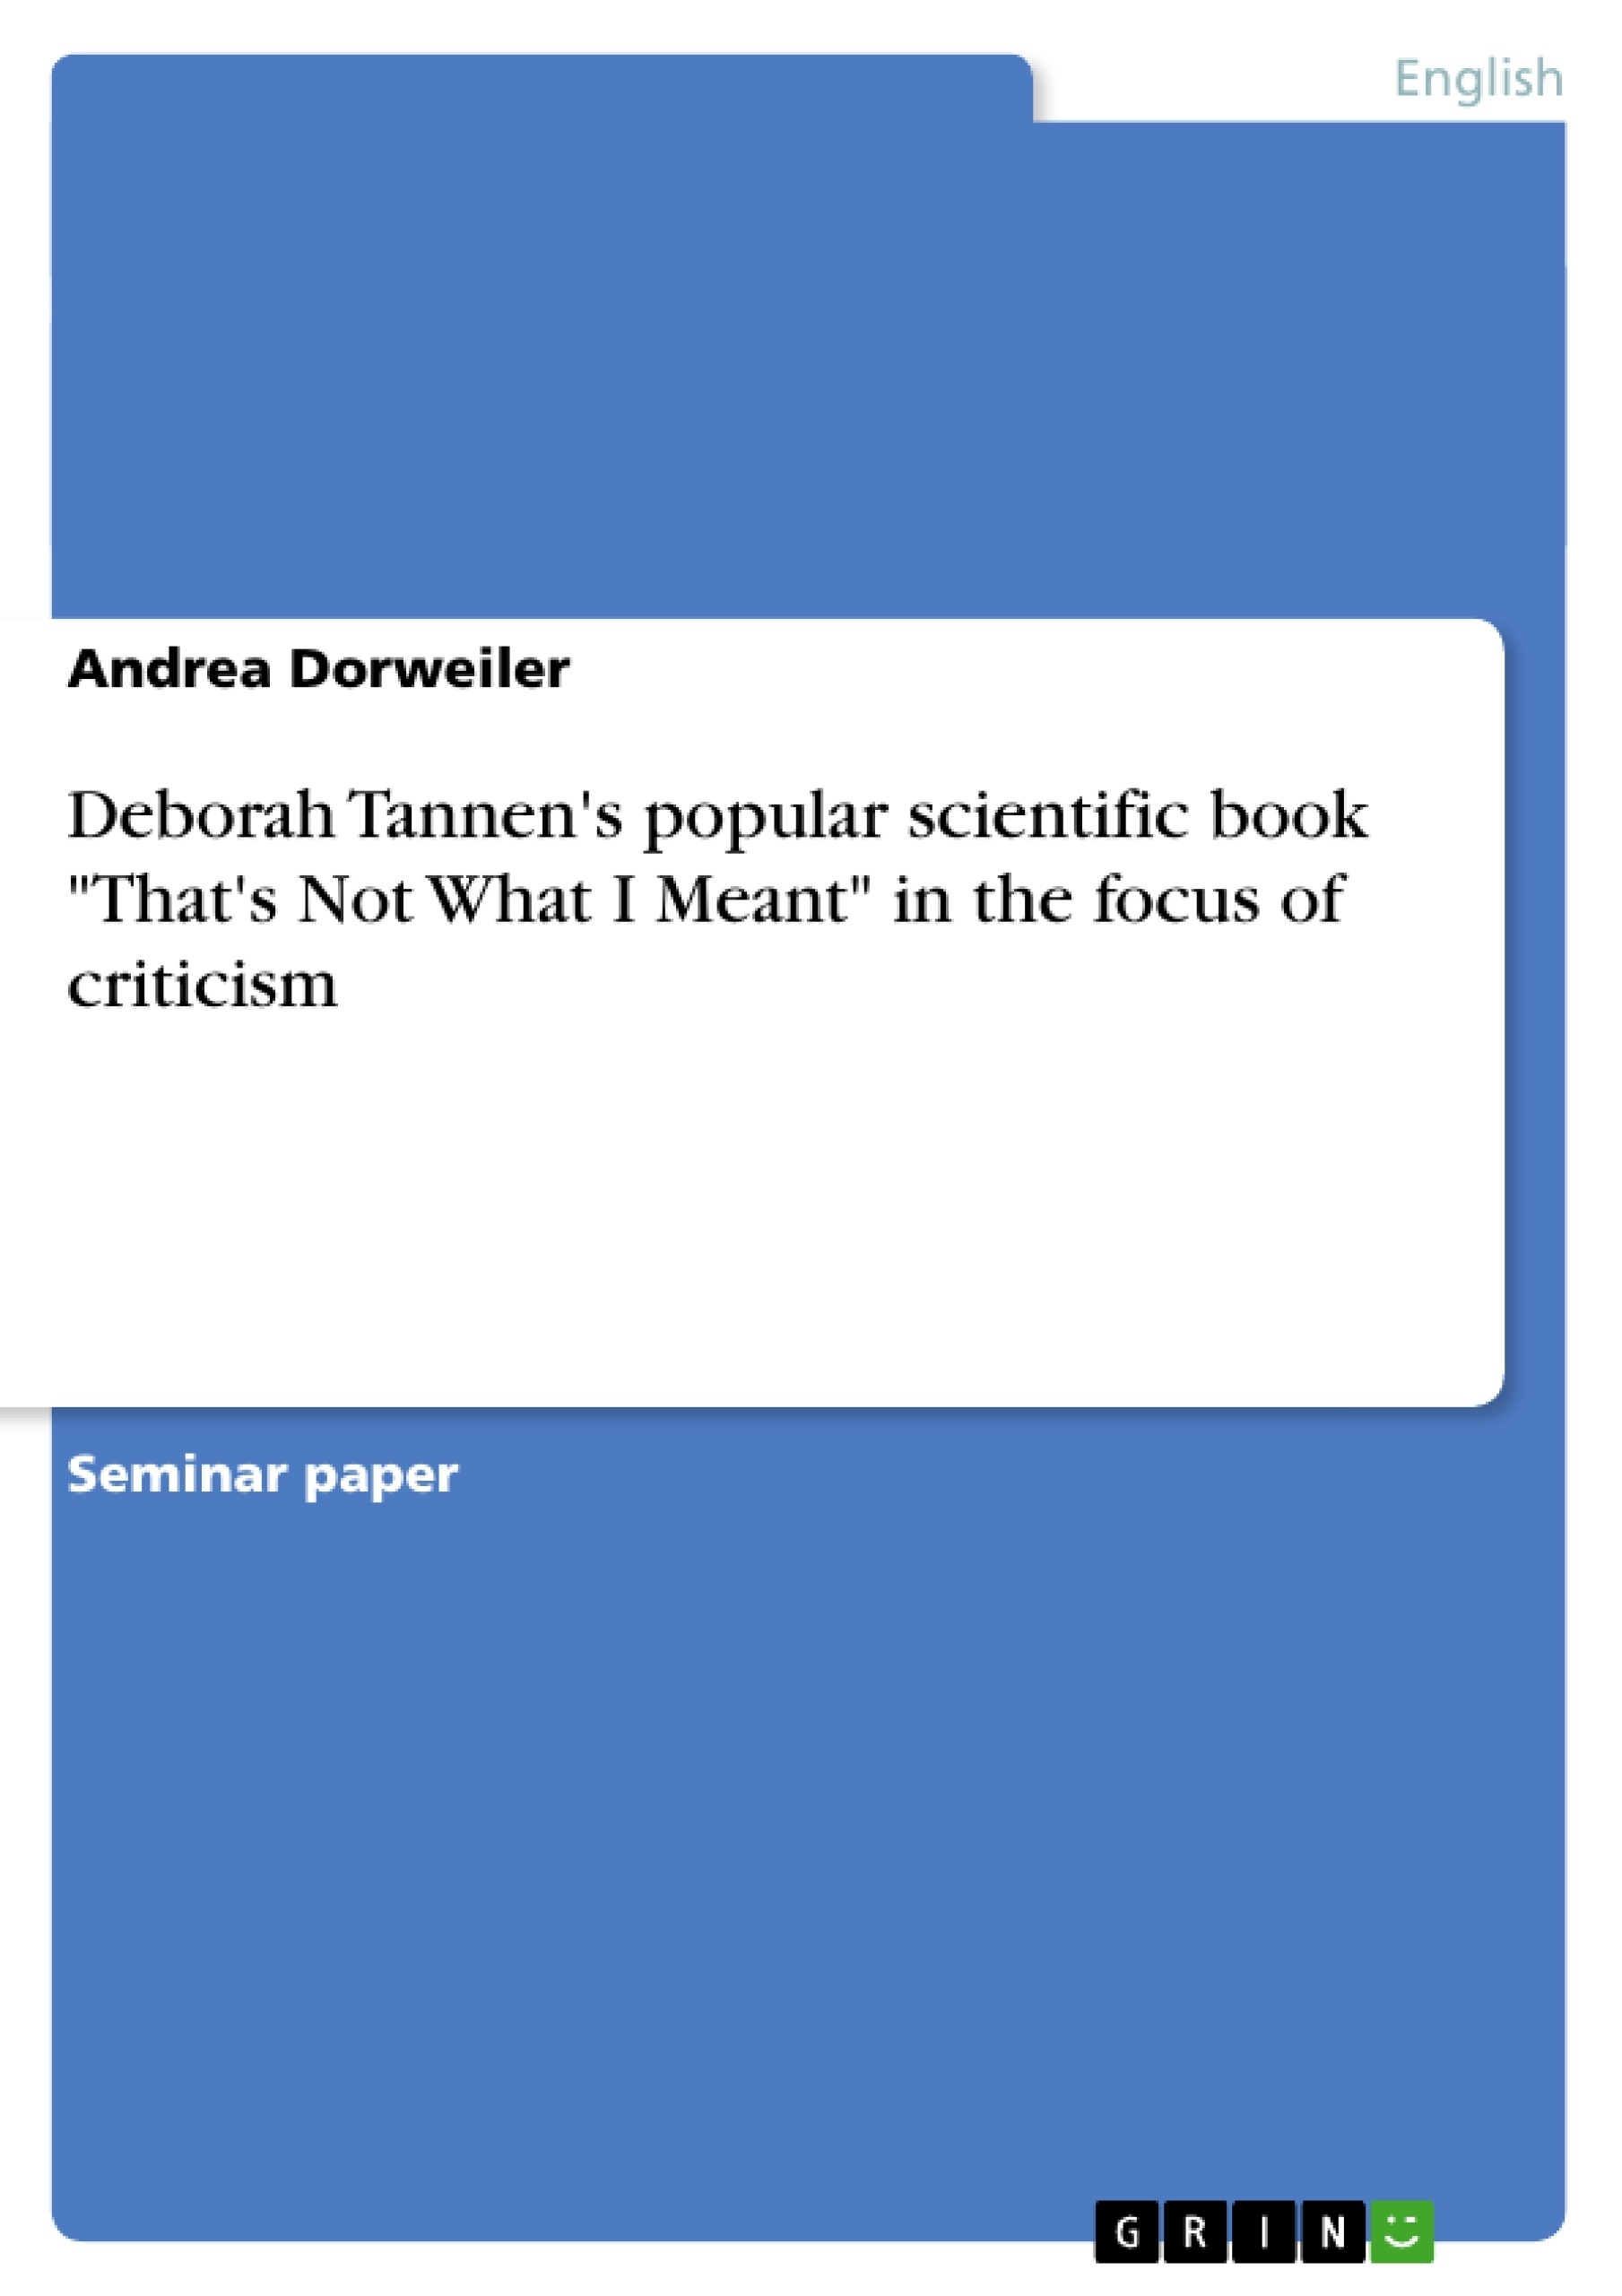 Title: Deborah Tannen's popular scientific book "That's Not What I Meant" in the focus of criticism